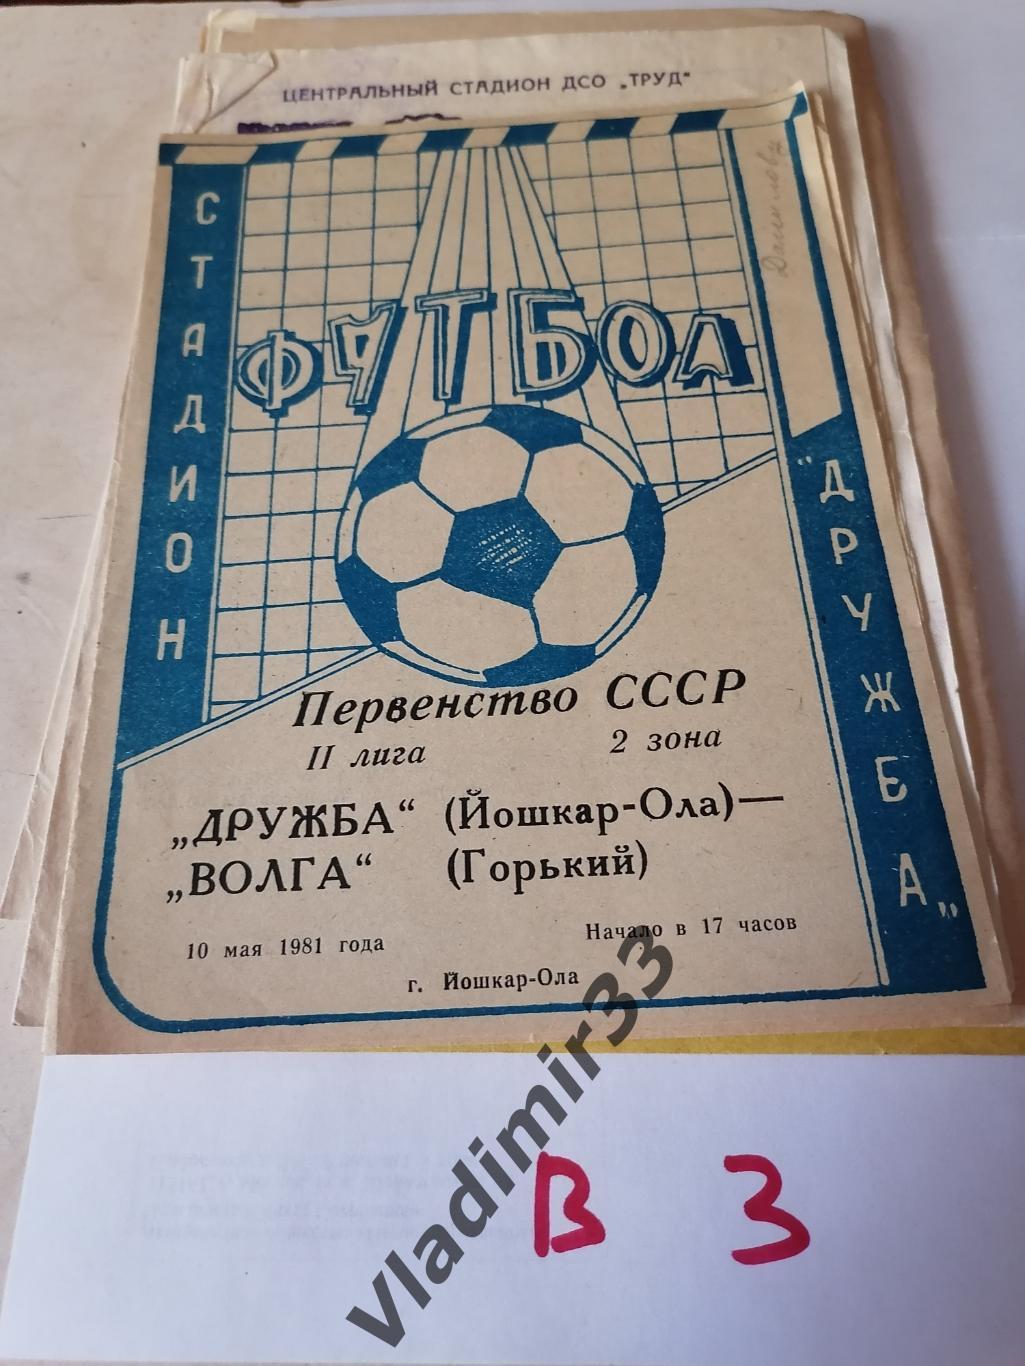 Дружба Йошкар-Ола - Волга Горький 1981